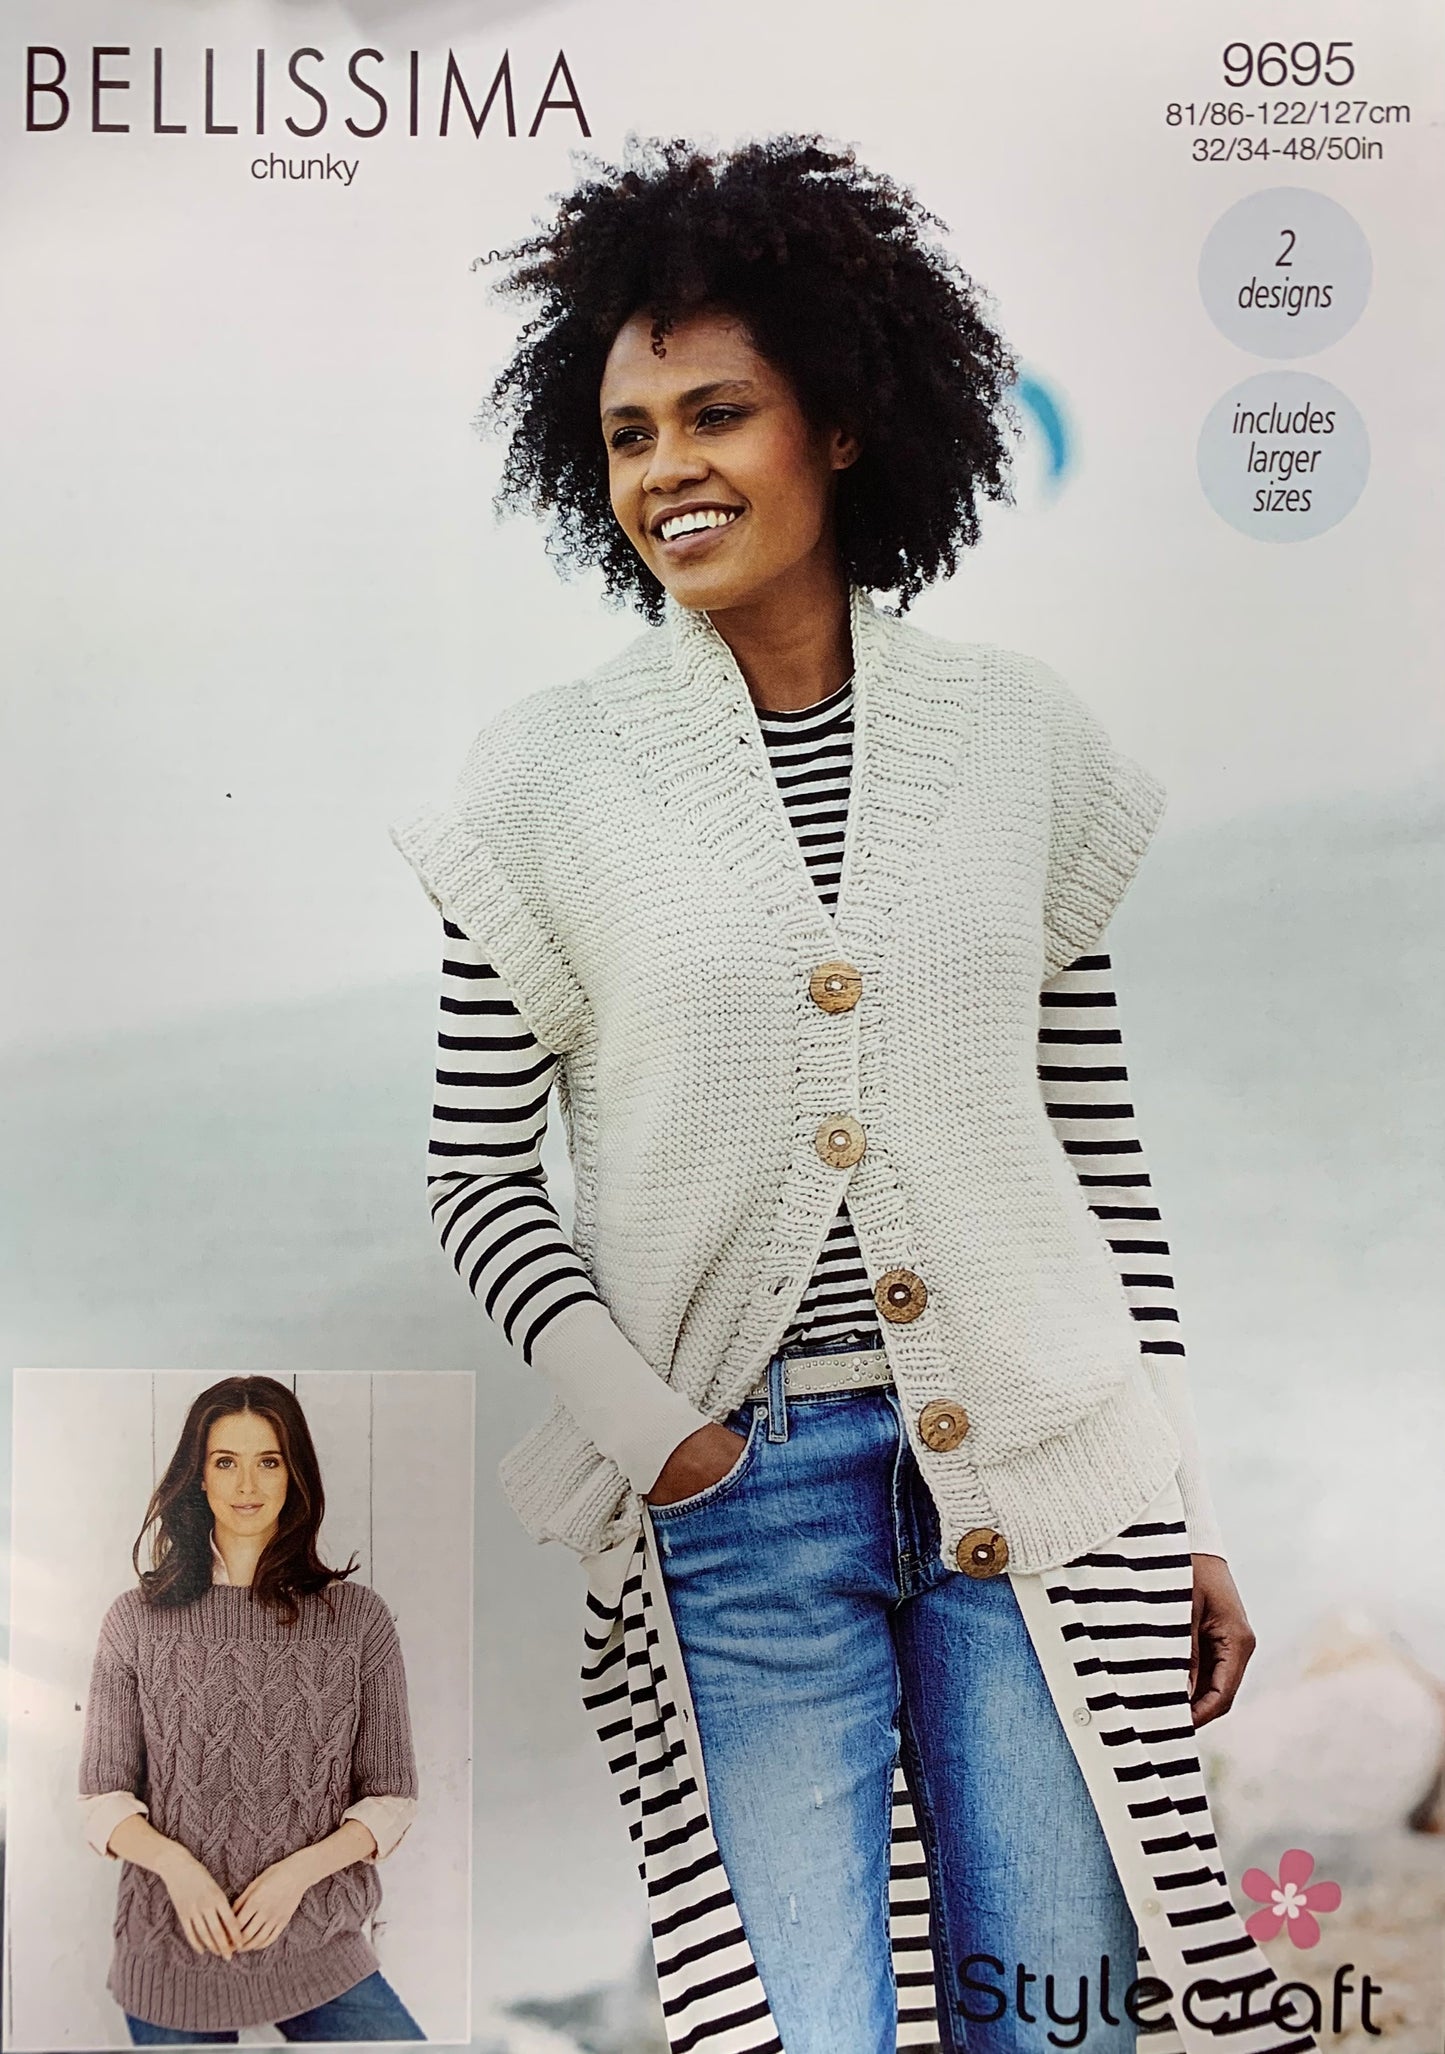 9695 Stylecraft Bellissima chunky ladies sweater and jacket knitting pattern